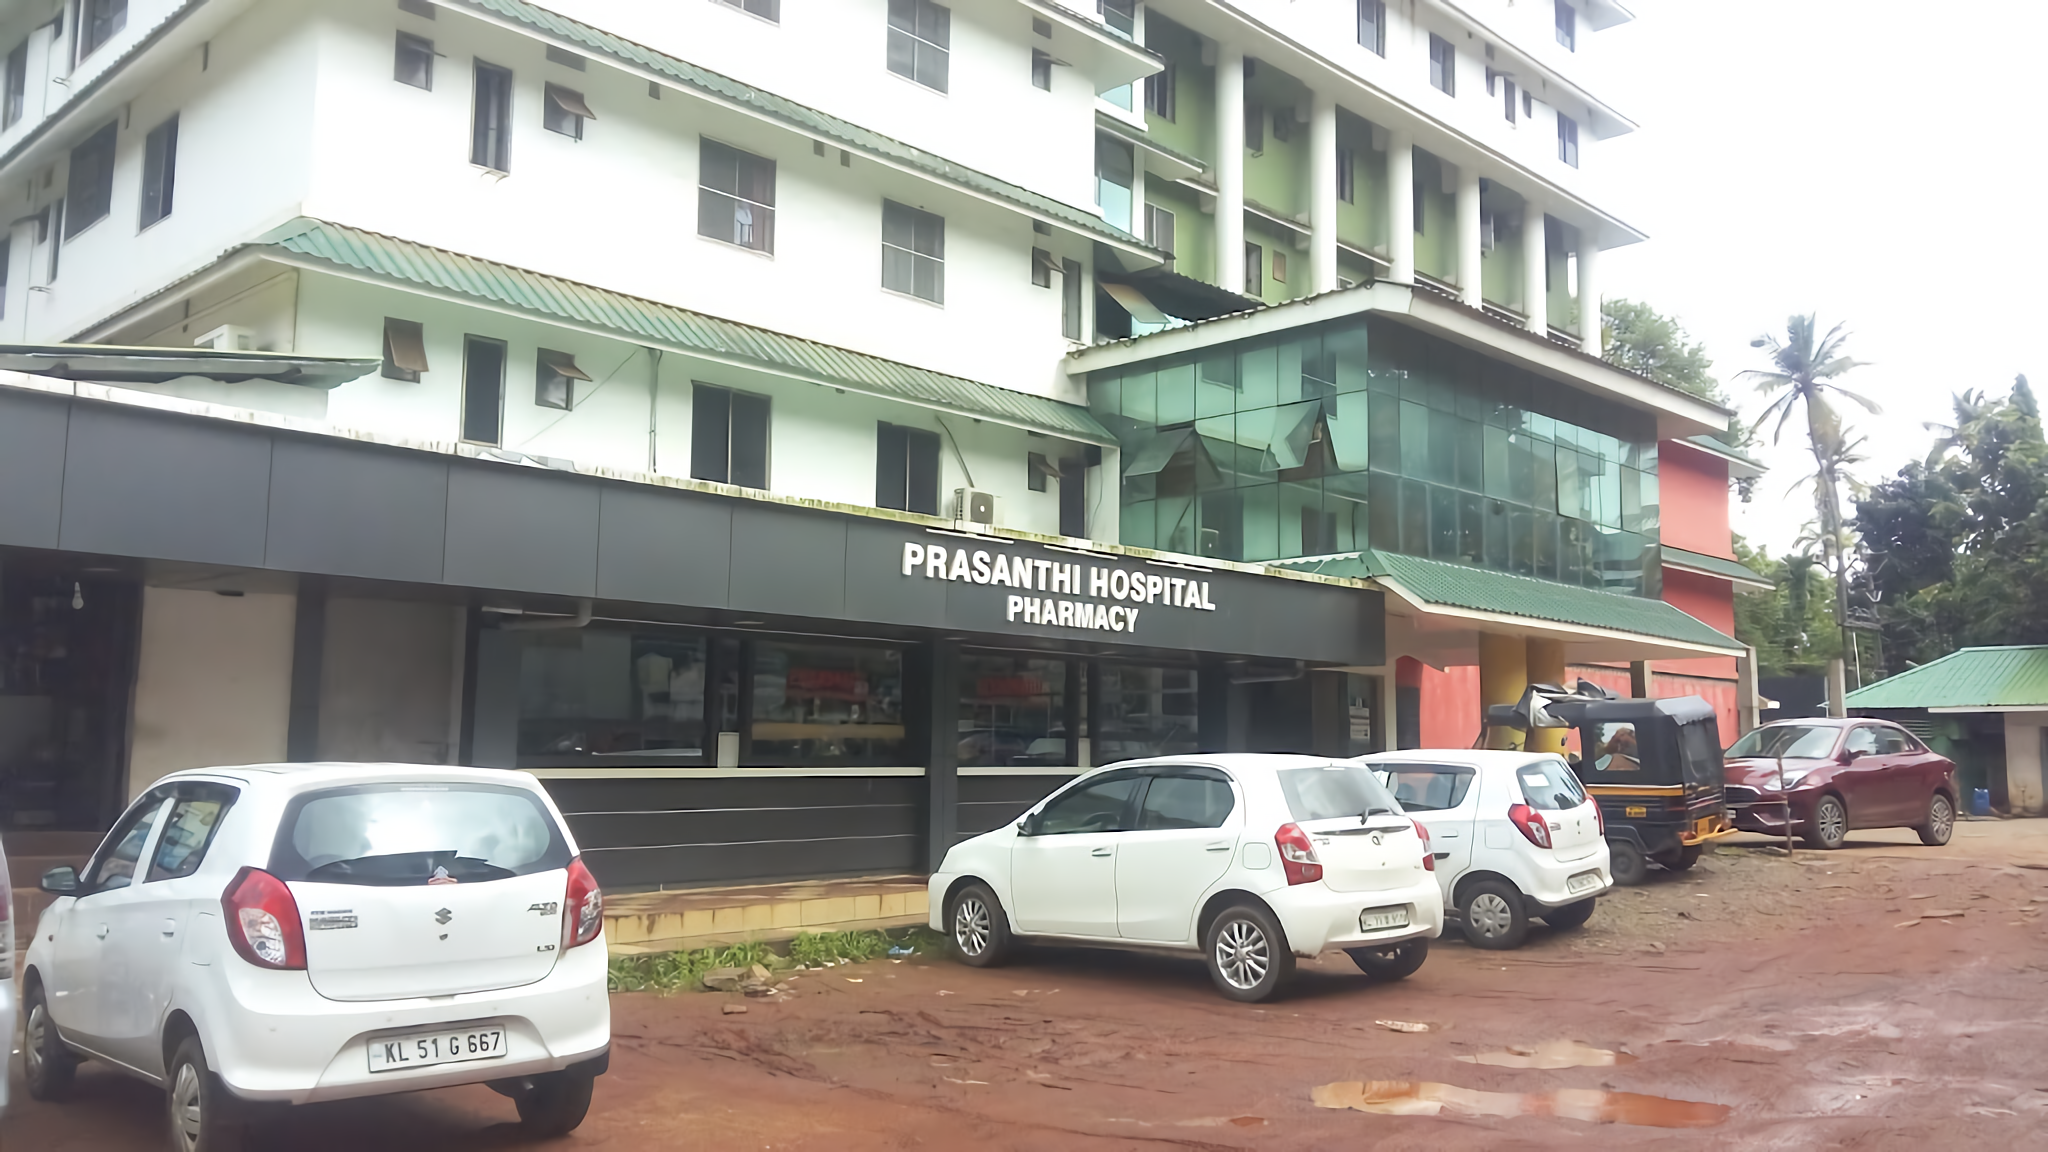 Prasanthi Hospital